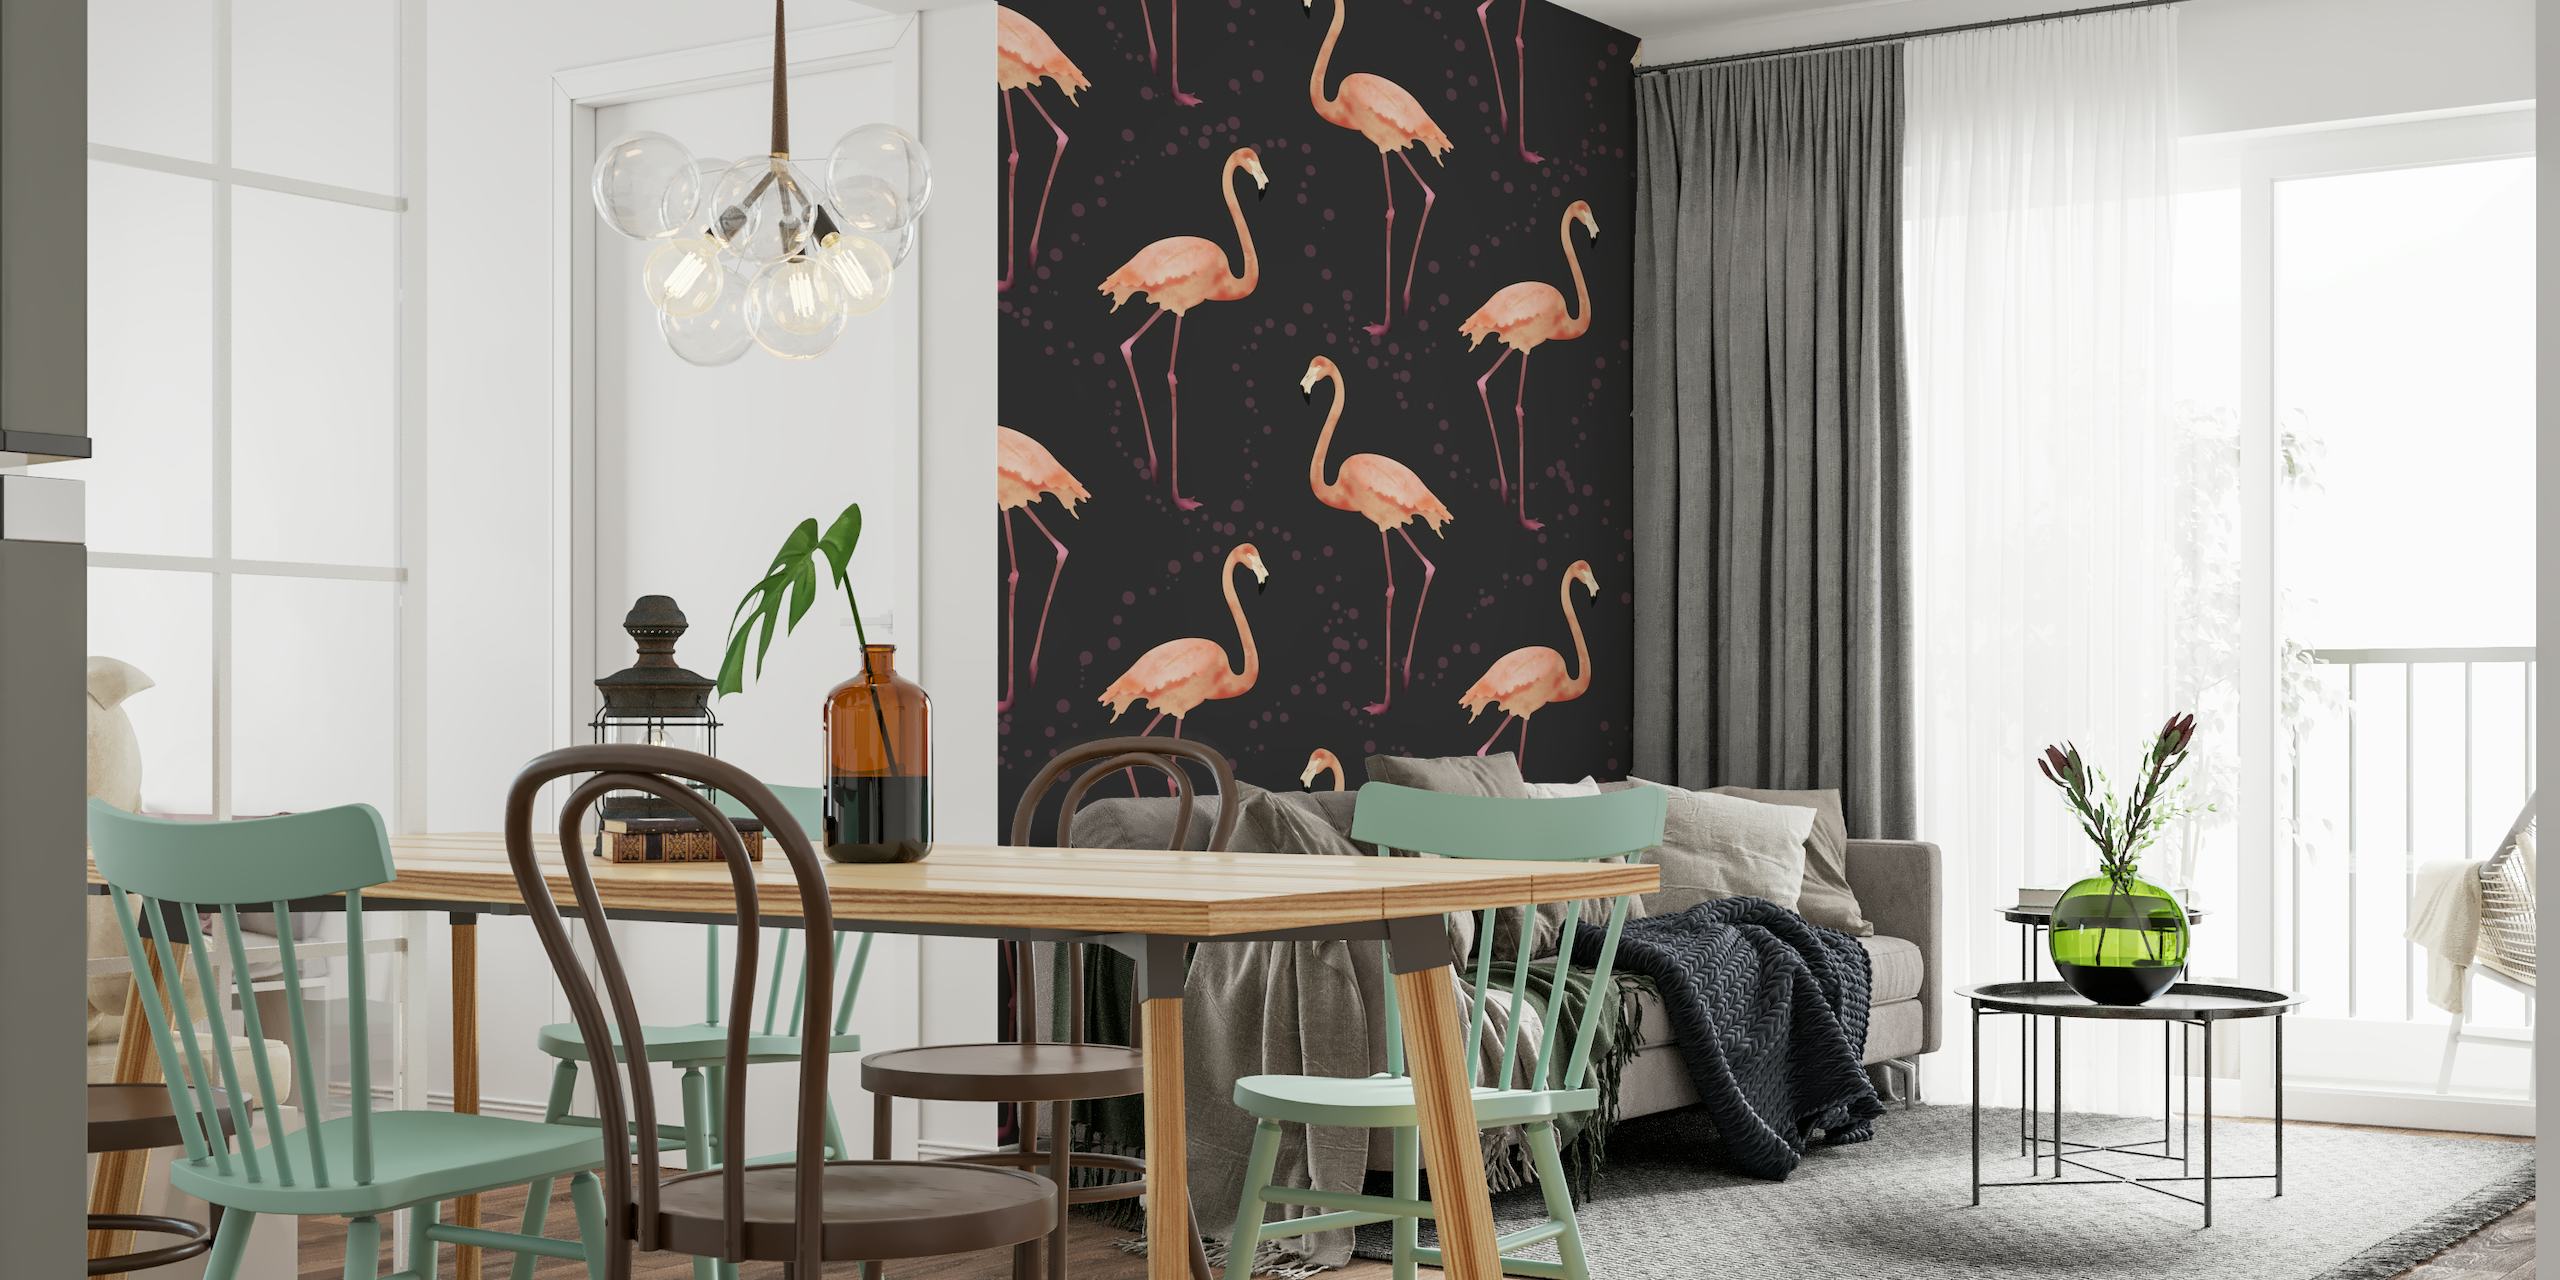 The Flamingo Dance fuchsia papiers peint